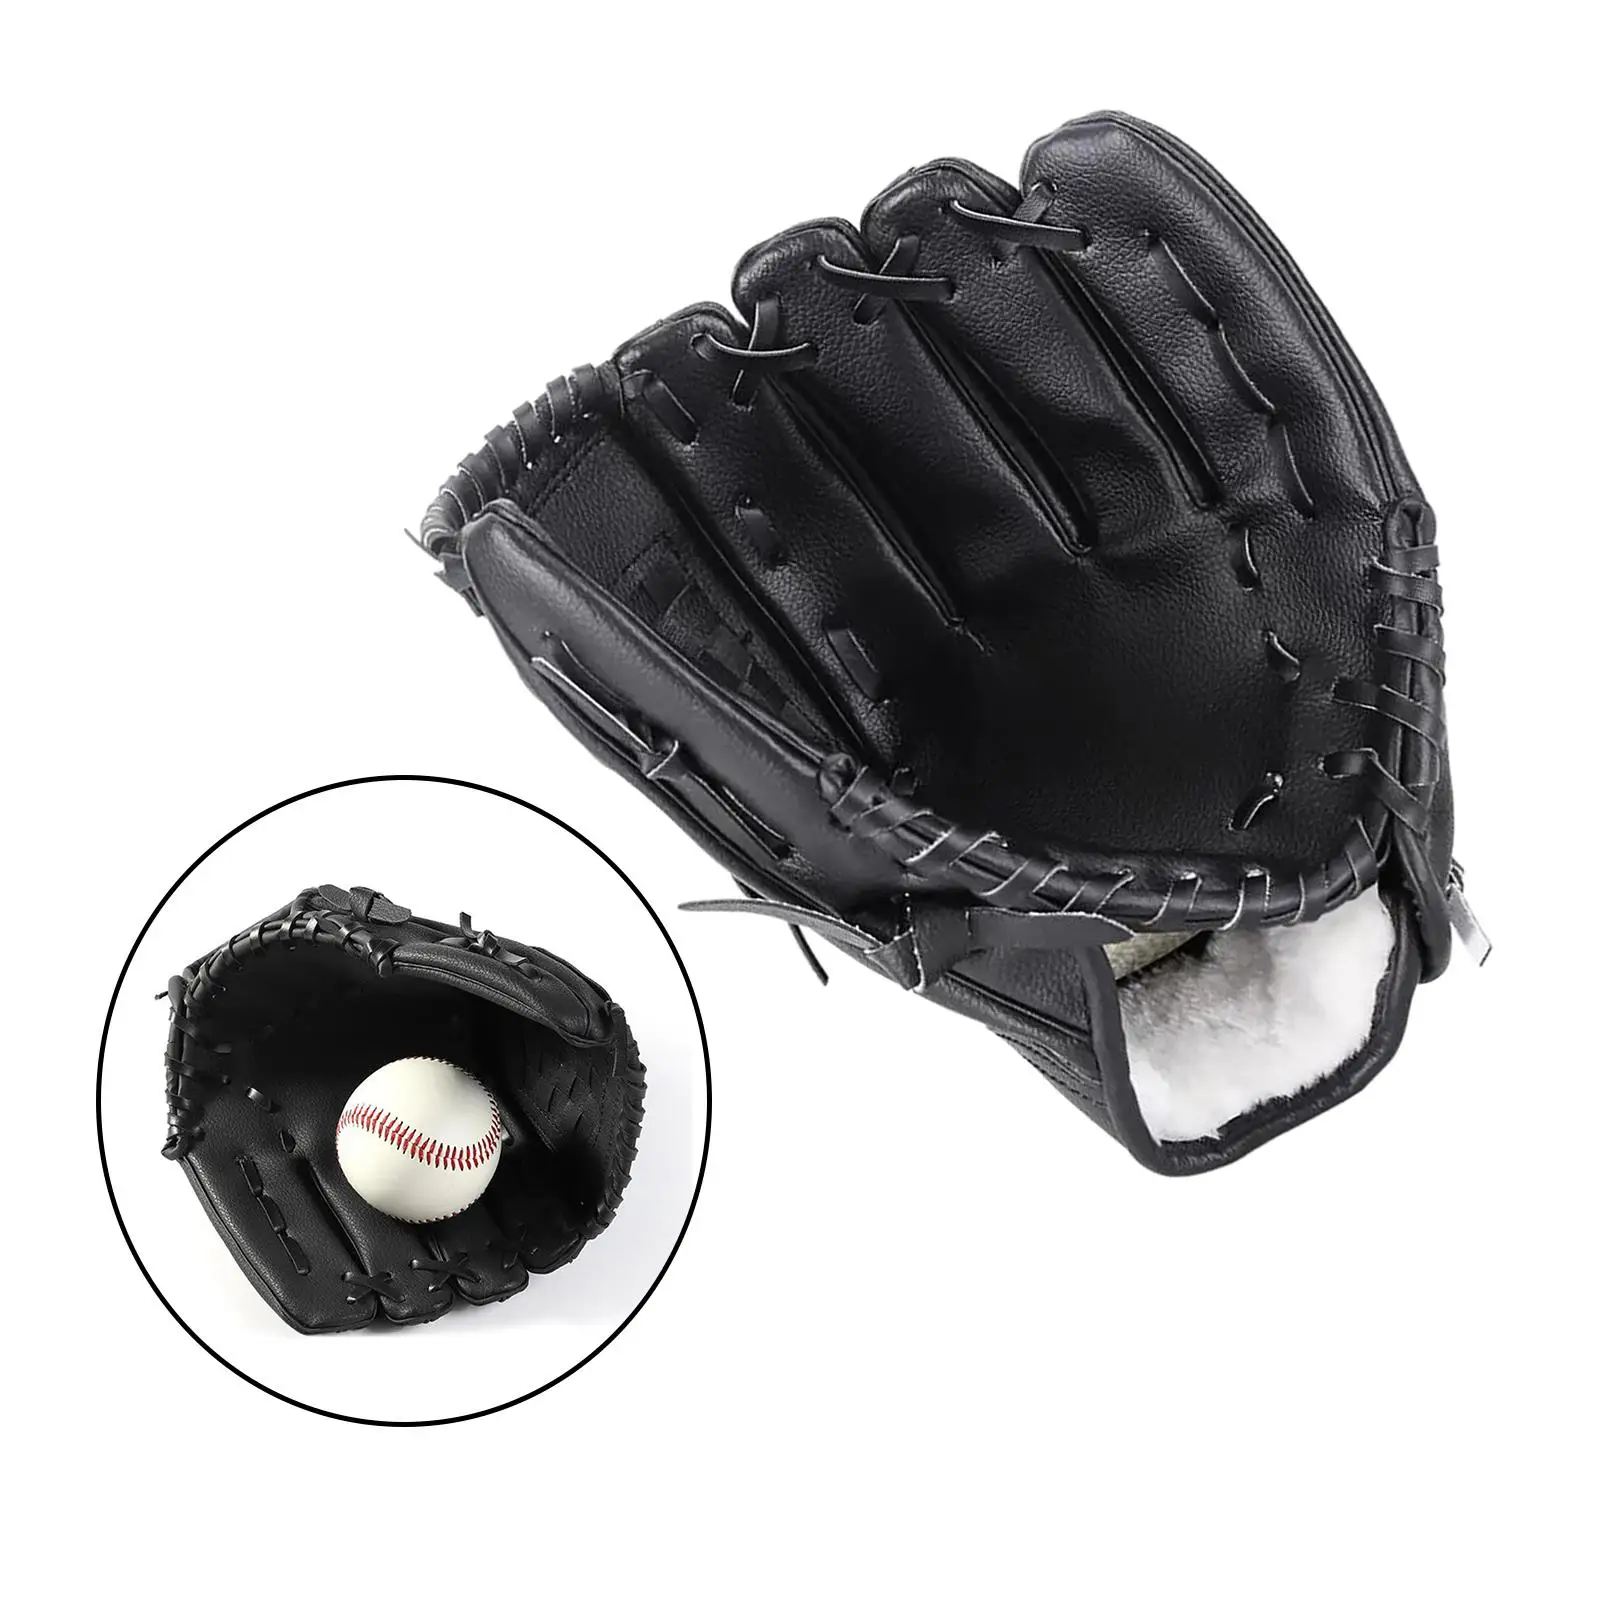 Baseball Glove Thickened Easy to Break in Softball Glove Baseball Fielding Glove for Batting Sports Training Beginner Backyard